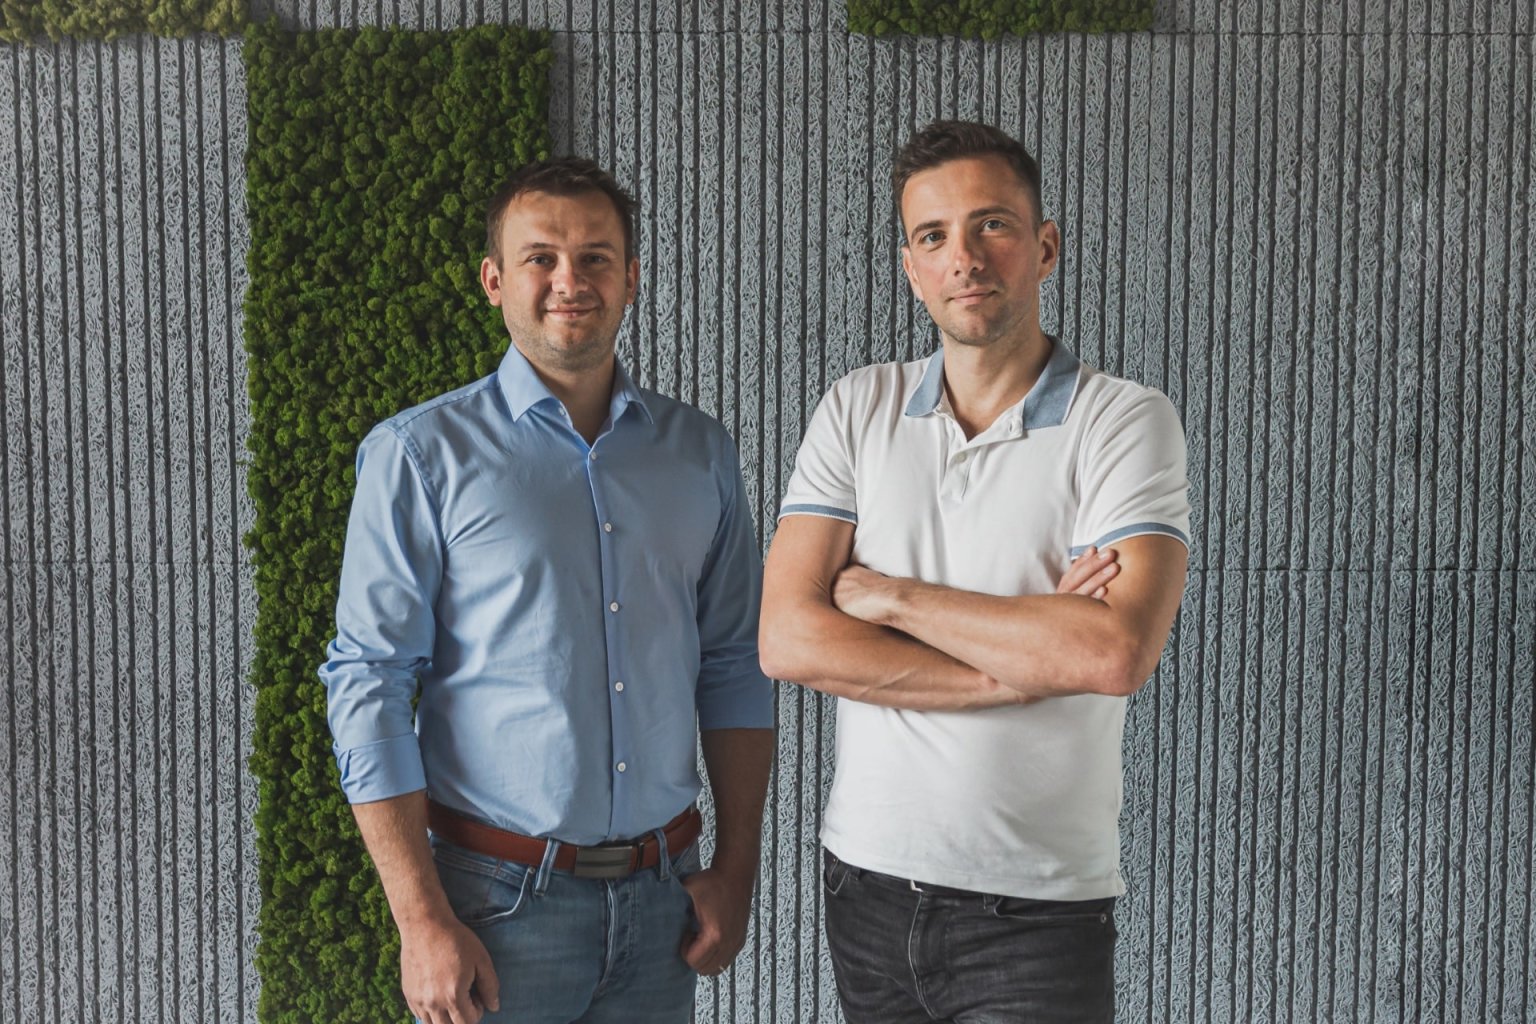 Zleva Lukáš Eštvanc a Roland Džogan, zakladatelé startupu Ydistr